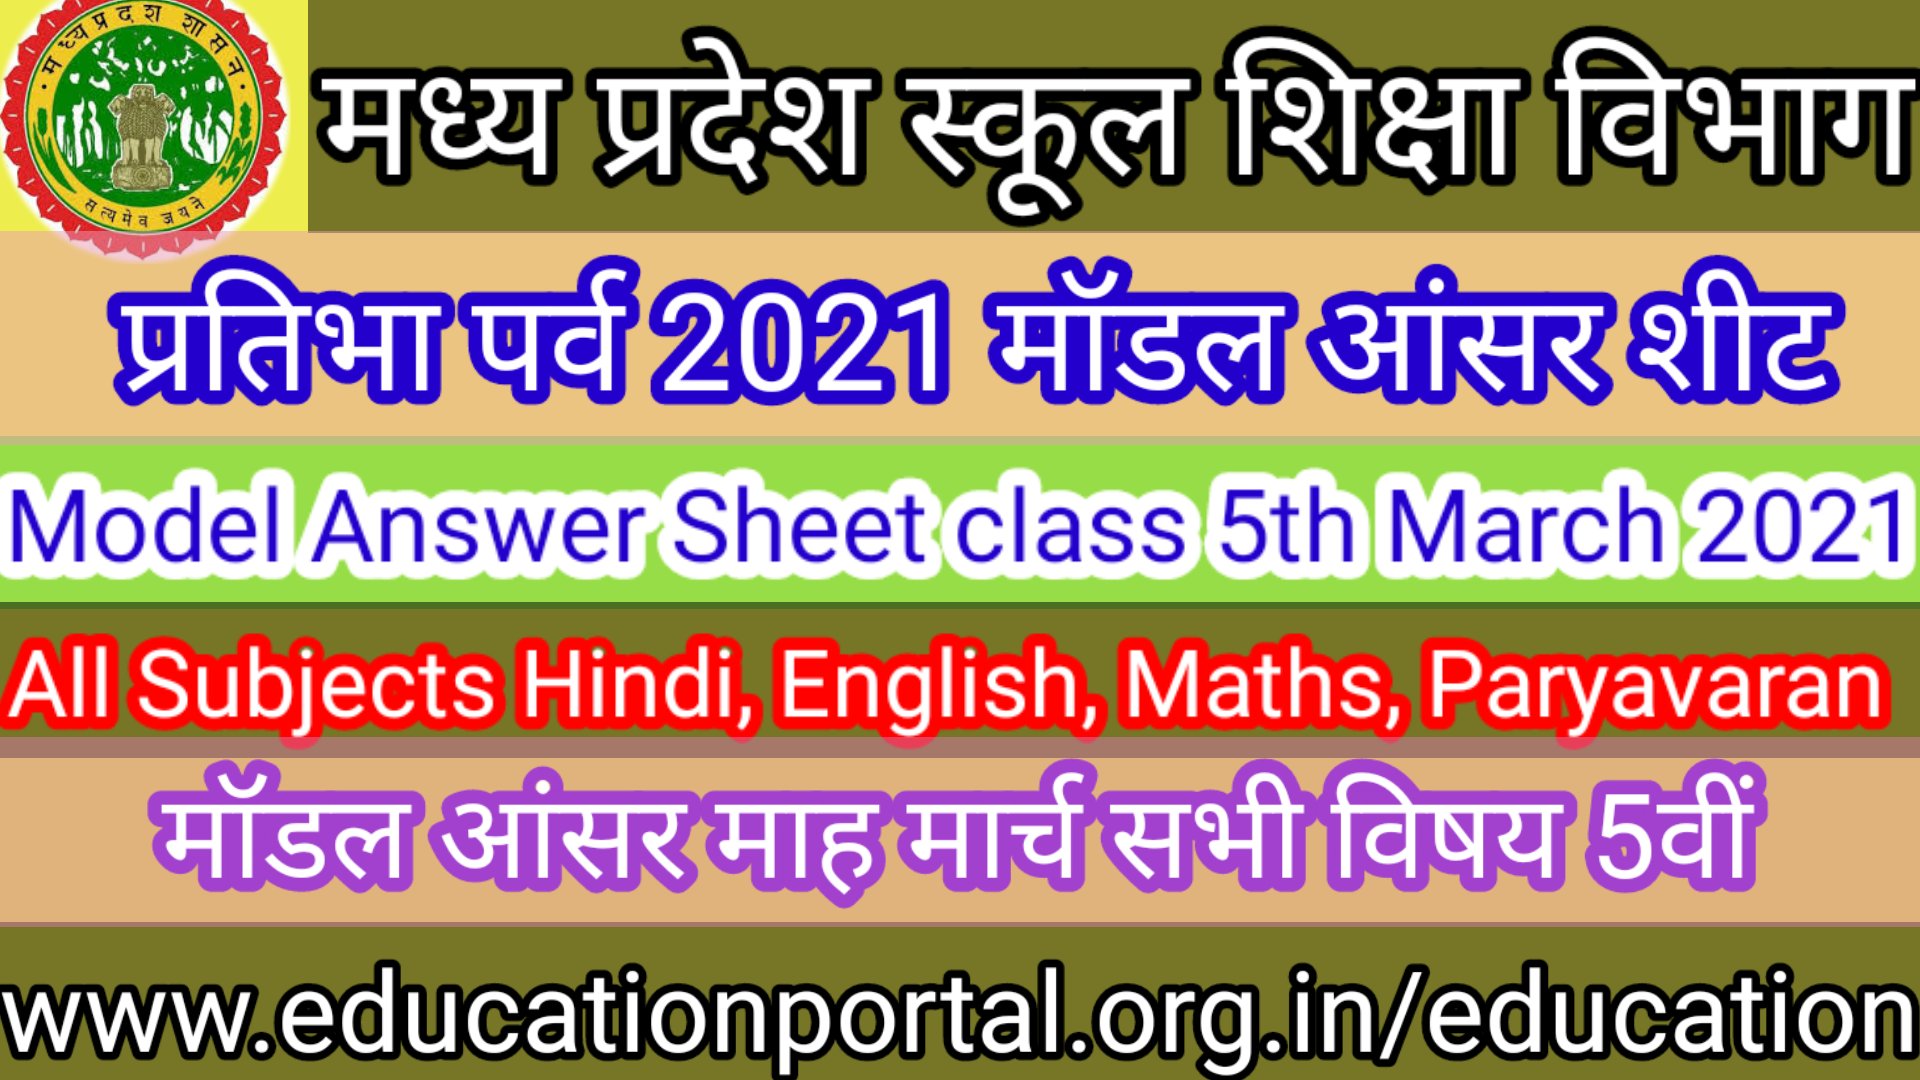 Pratibha Parva 2021 Modal Answer Month March All Subjects Hindi, English, Maths, Paryavaran मॉडल आंसर माह मार्च सभी विषय 5वीं